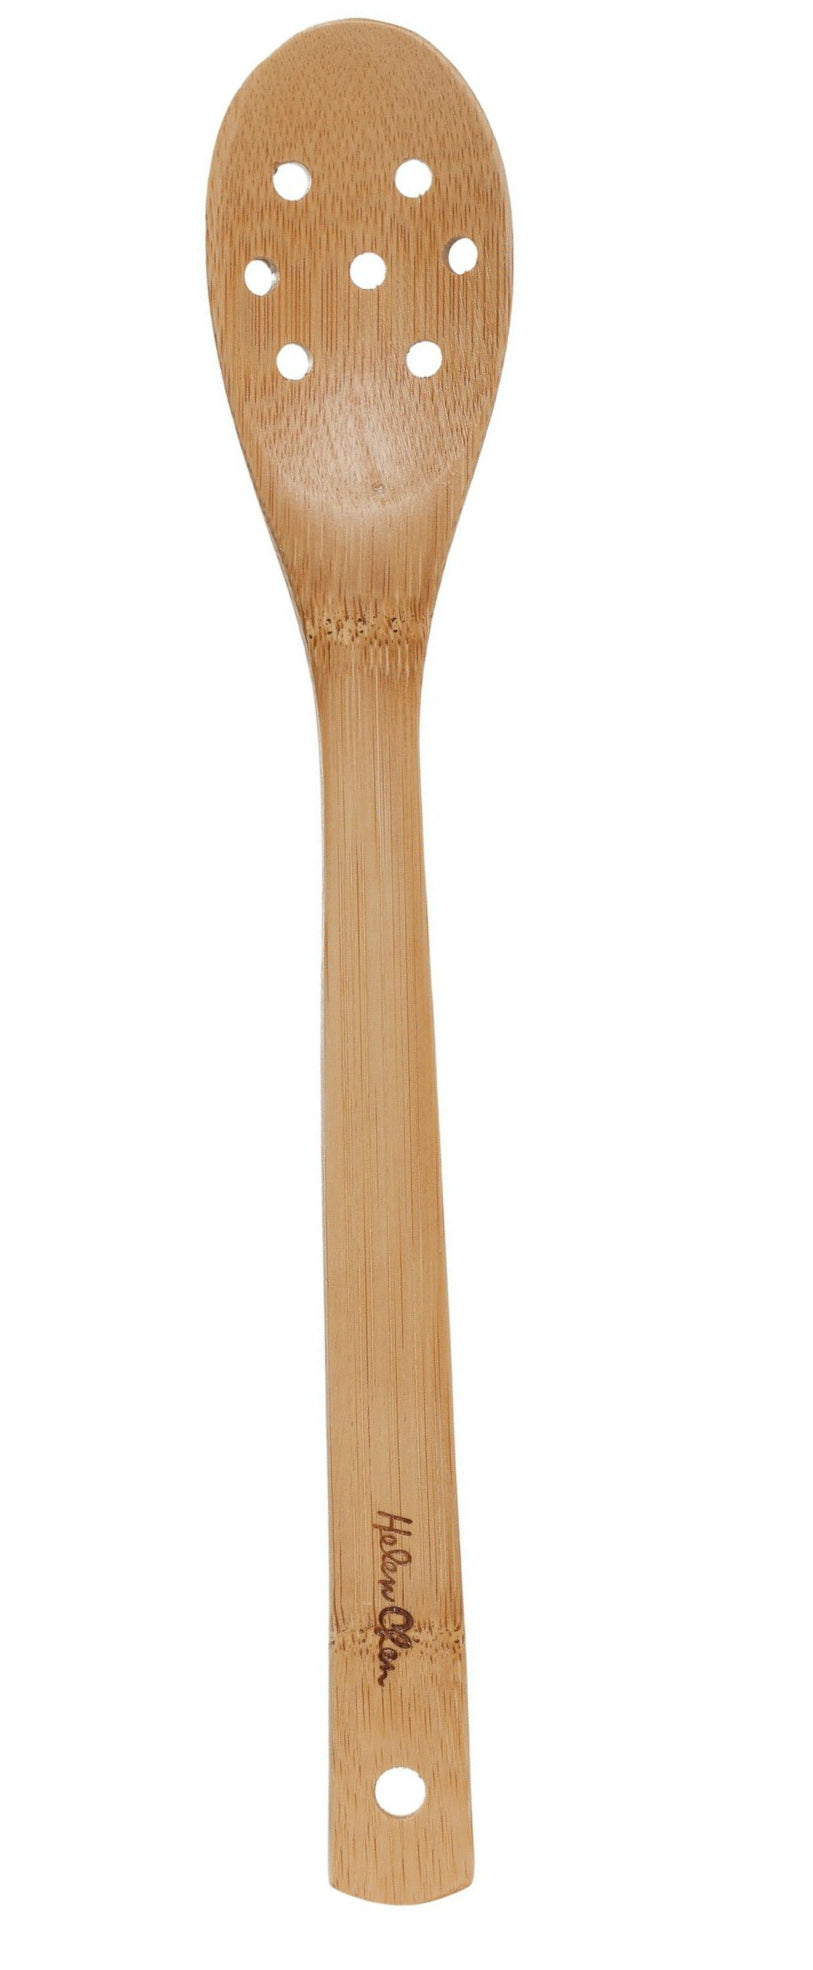 Helen's Asian Kitchen 97051 Bamboo Pierced Spoon, 12"